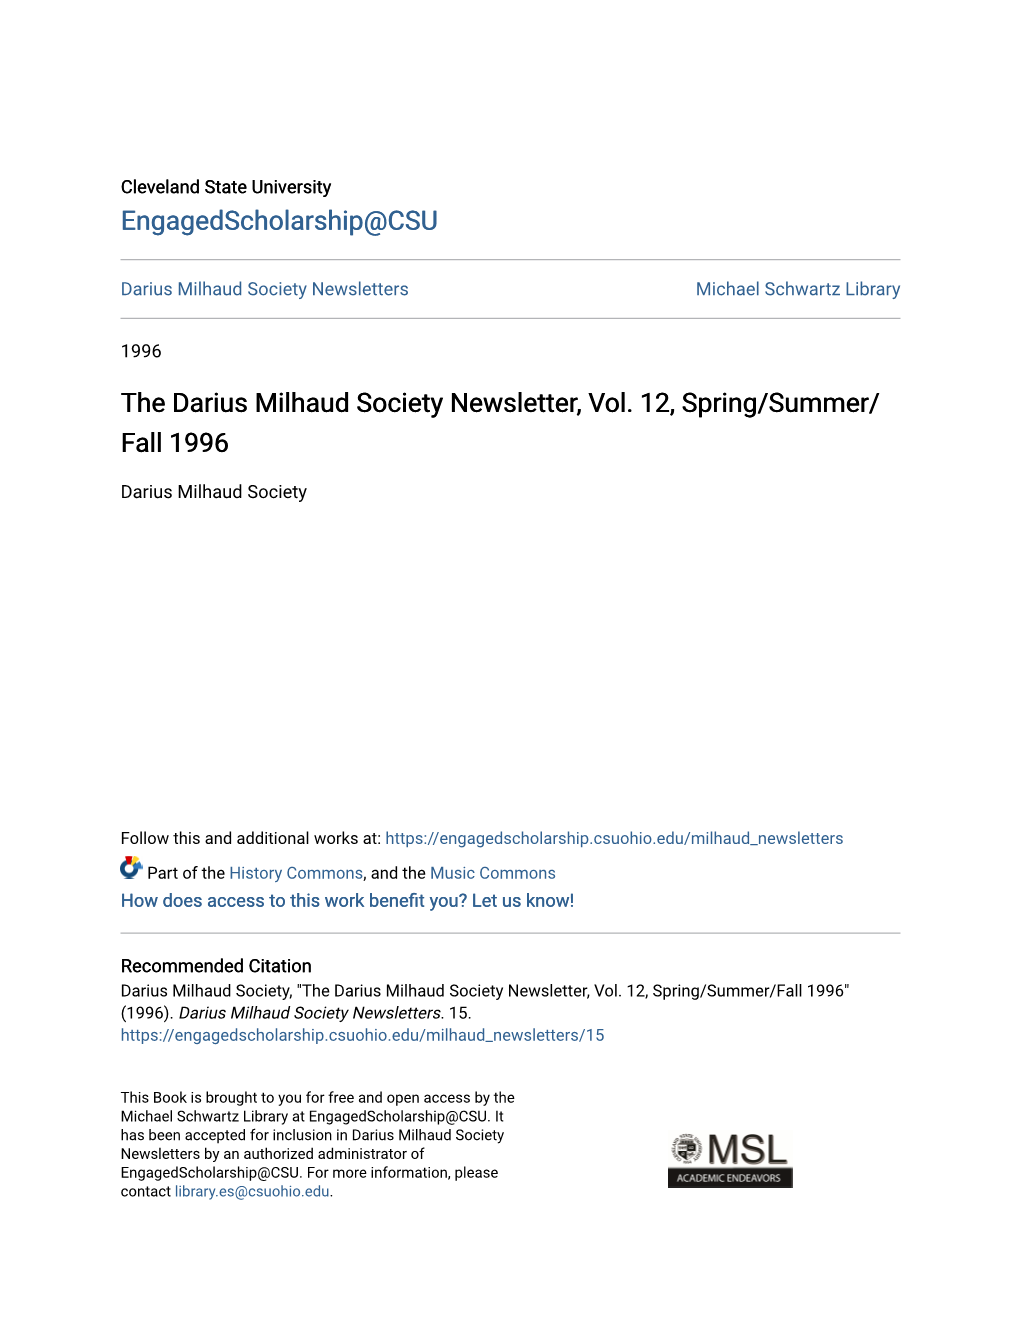 The Darius Milhaud Society Newsletter, Vol. 12, Spring/Summer/Fall 1996" (1996)